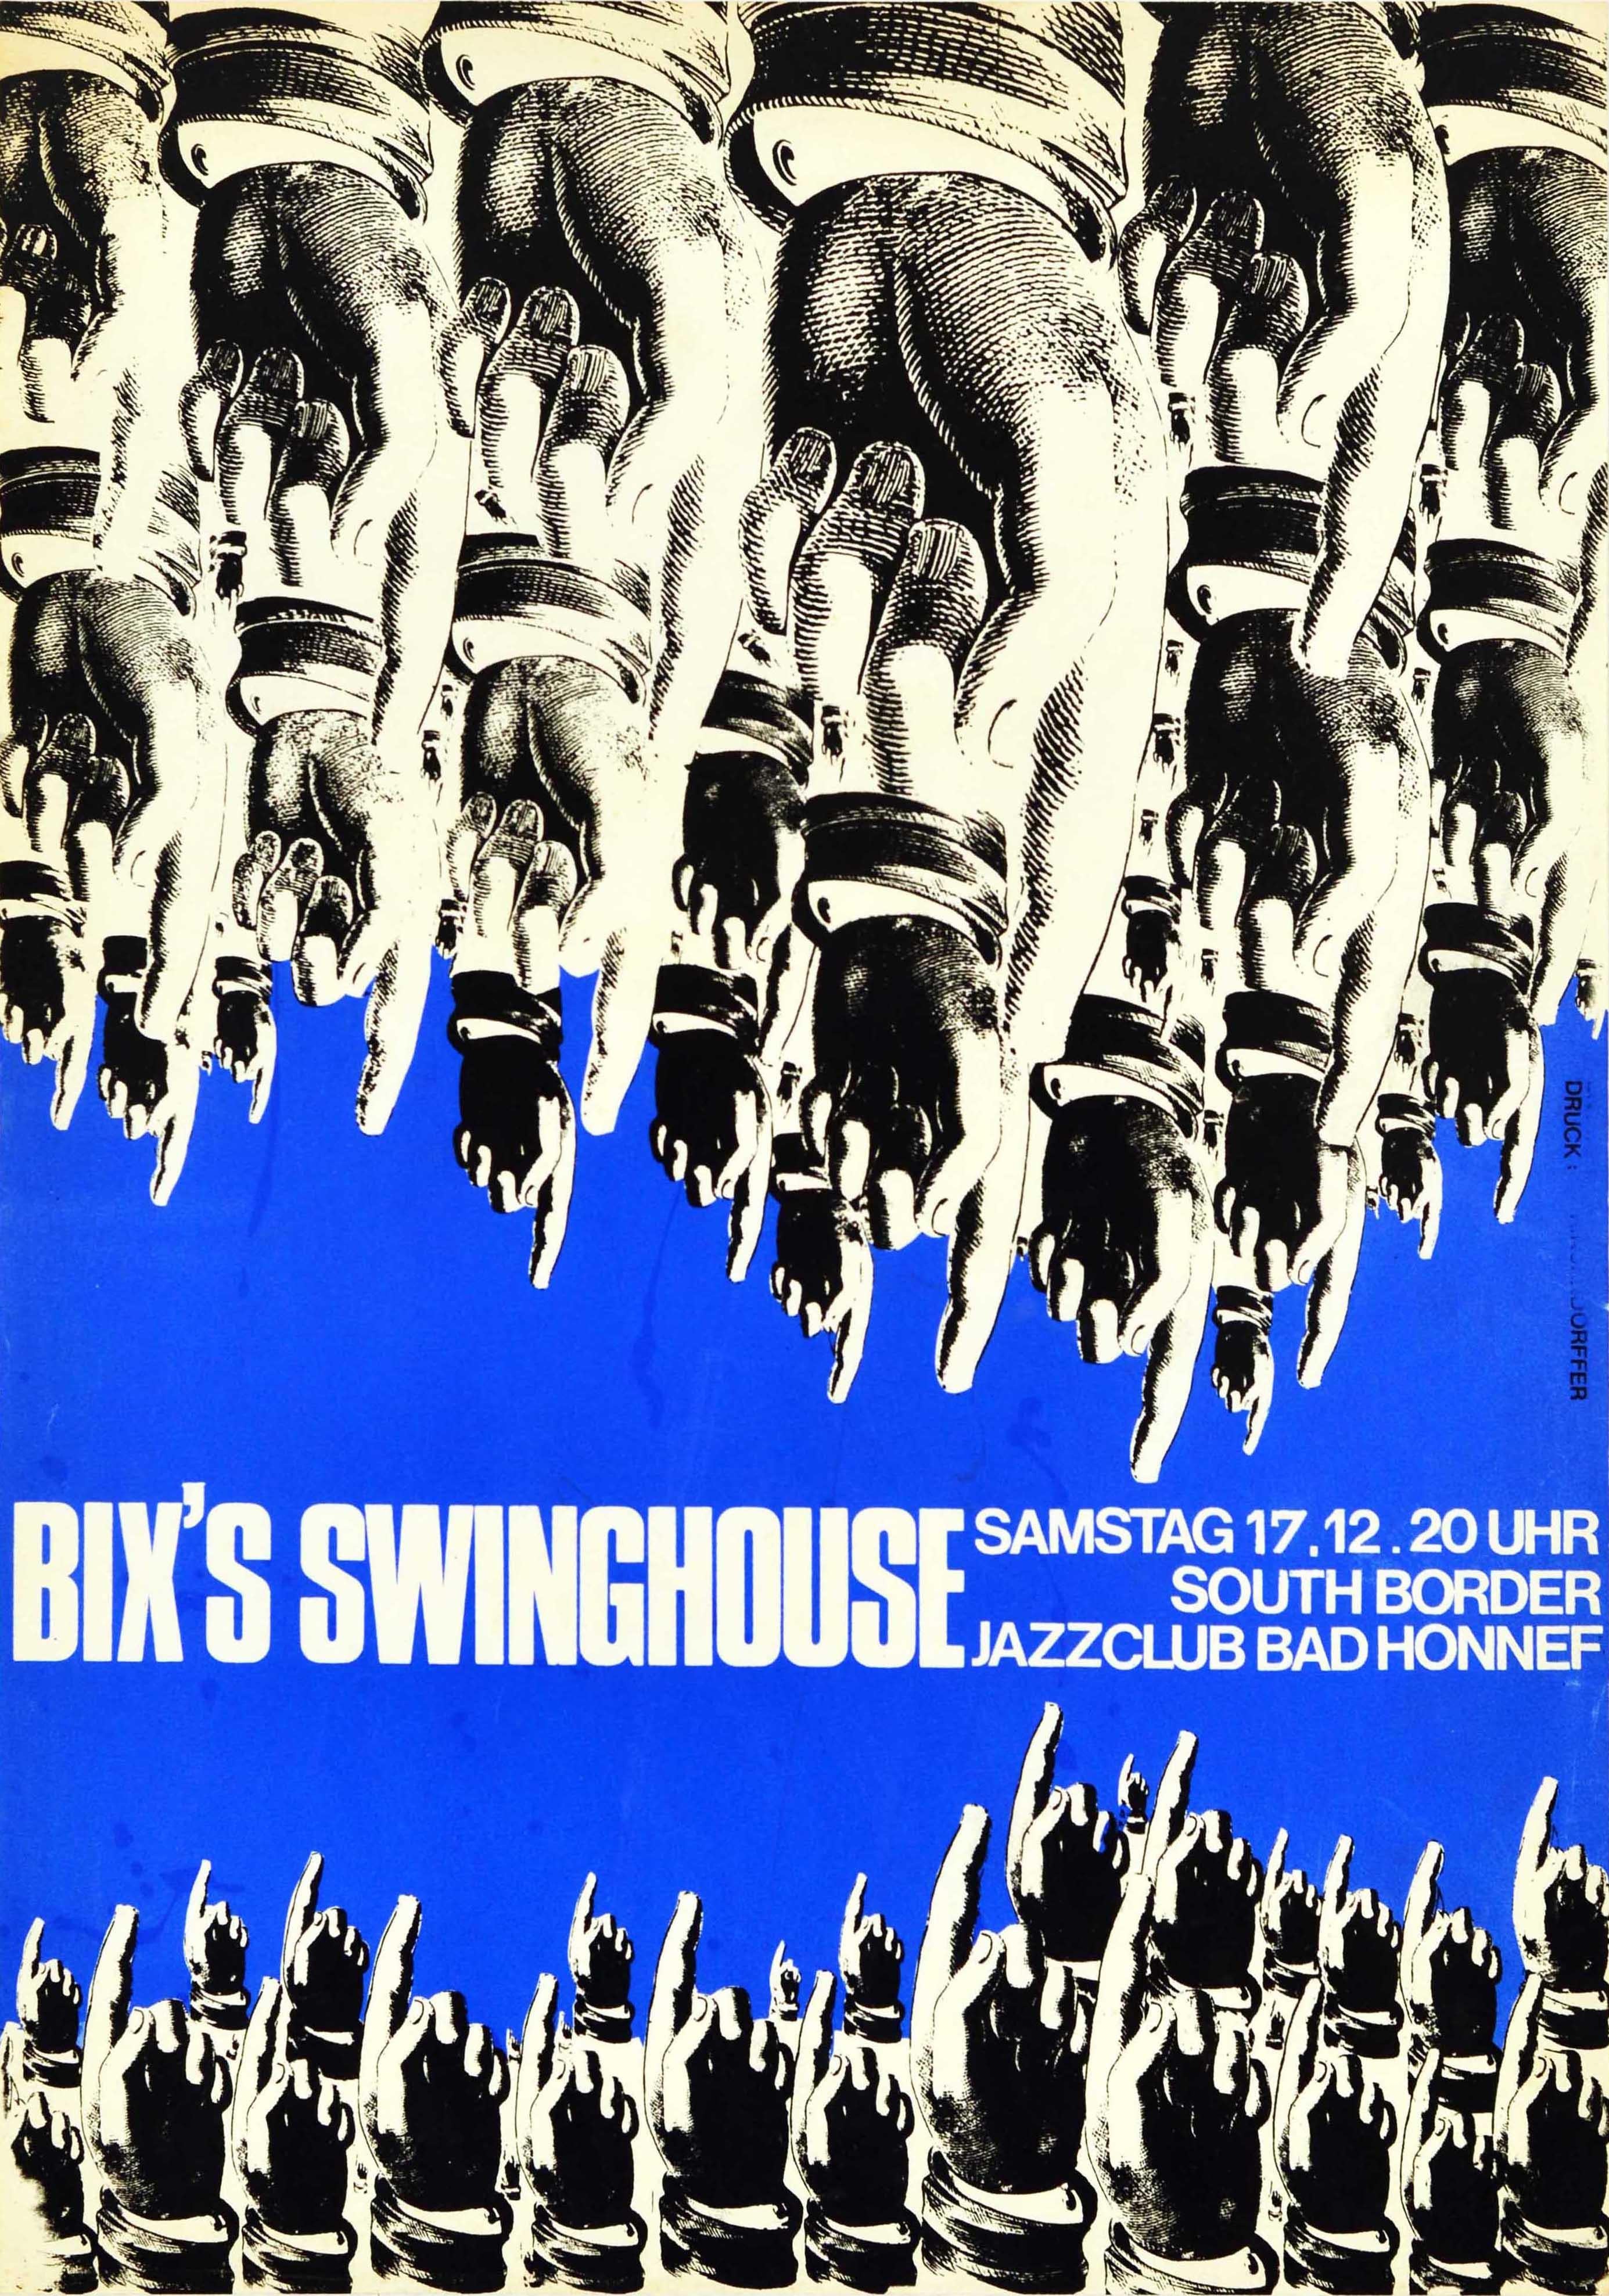 Unknown Print - Original Vintage Music Poster Bix's Swinghouse South Border Jazz Club Bad Honnef